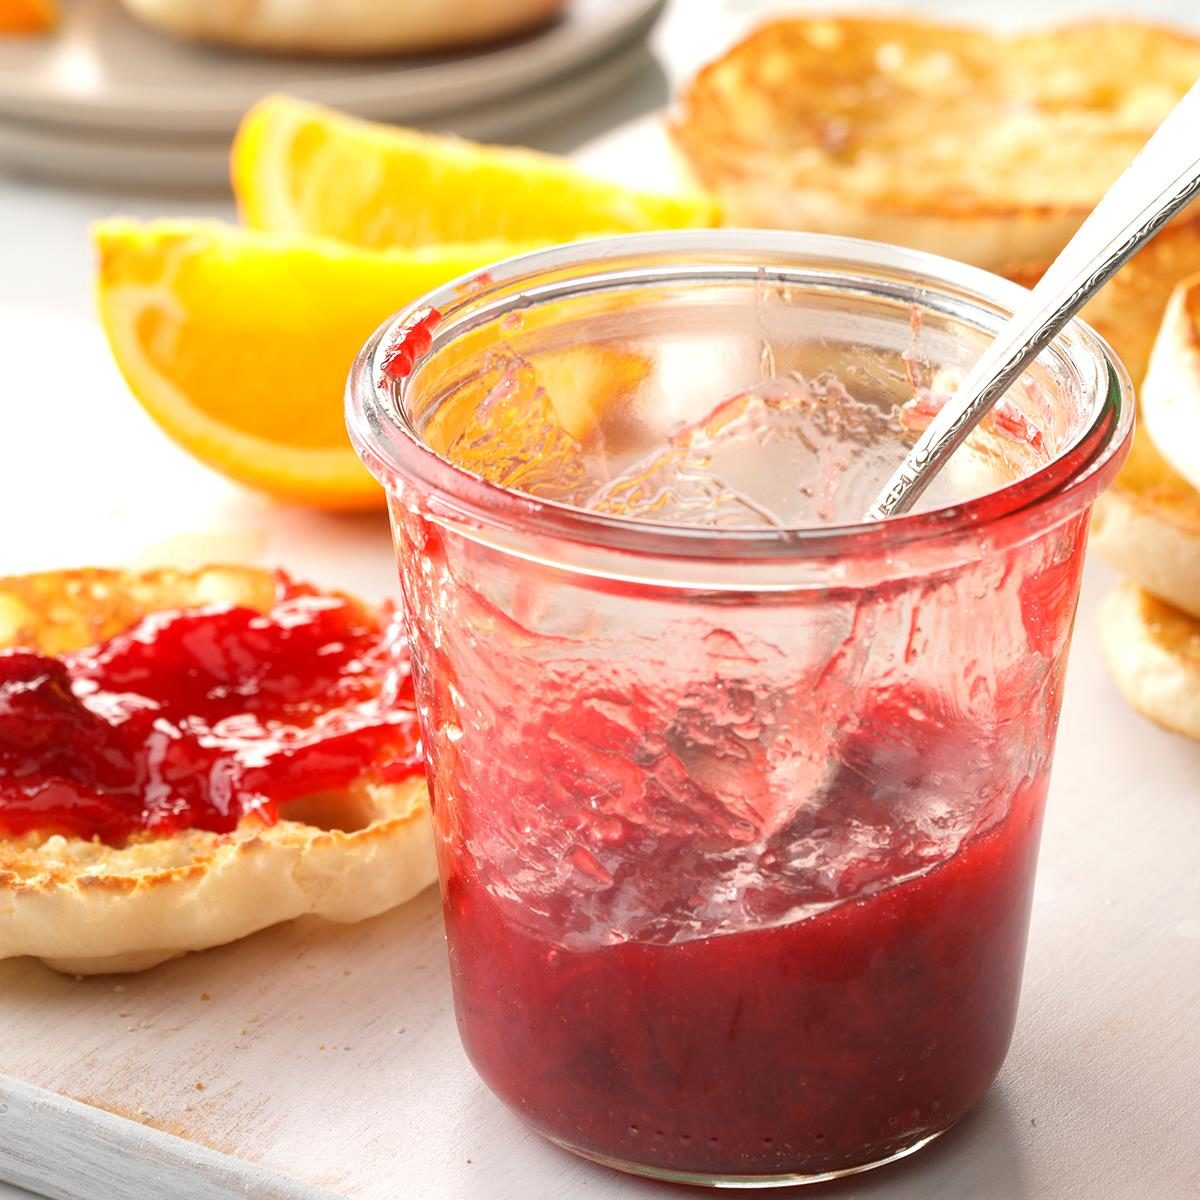 Cherry Rhubarb Jam Recipe: How to Make It